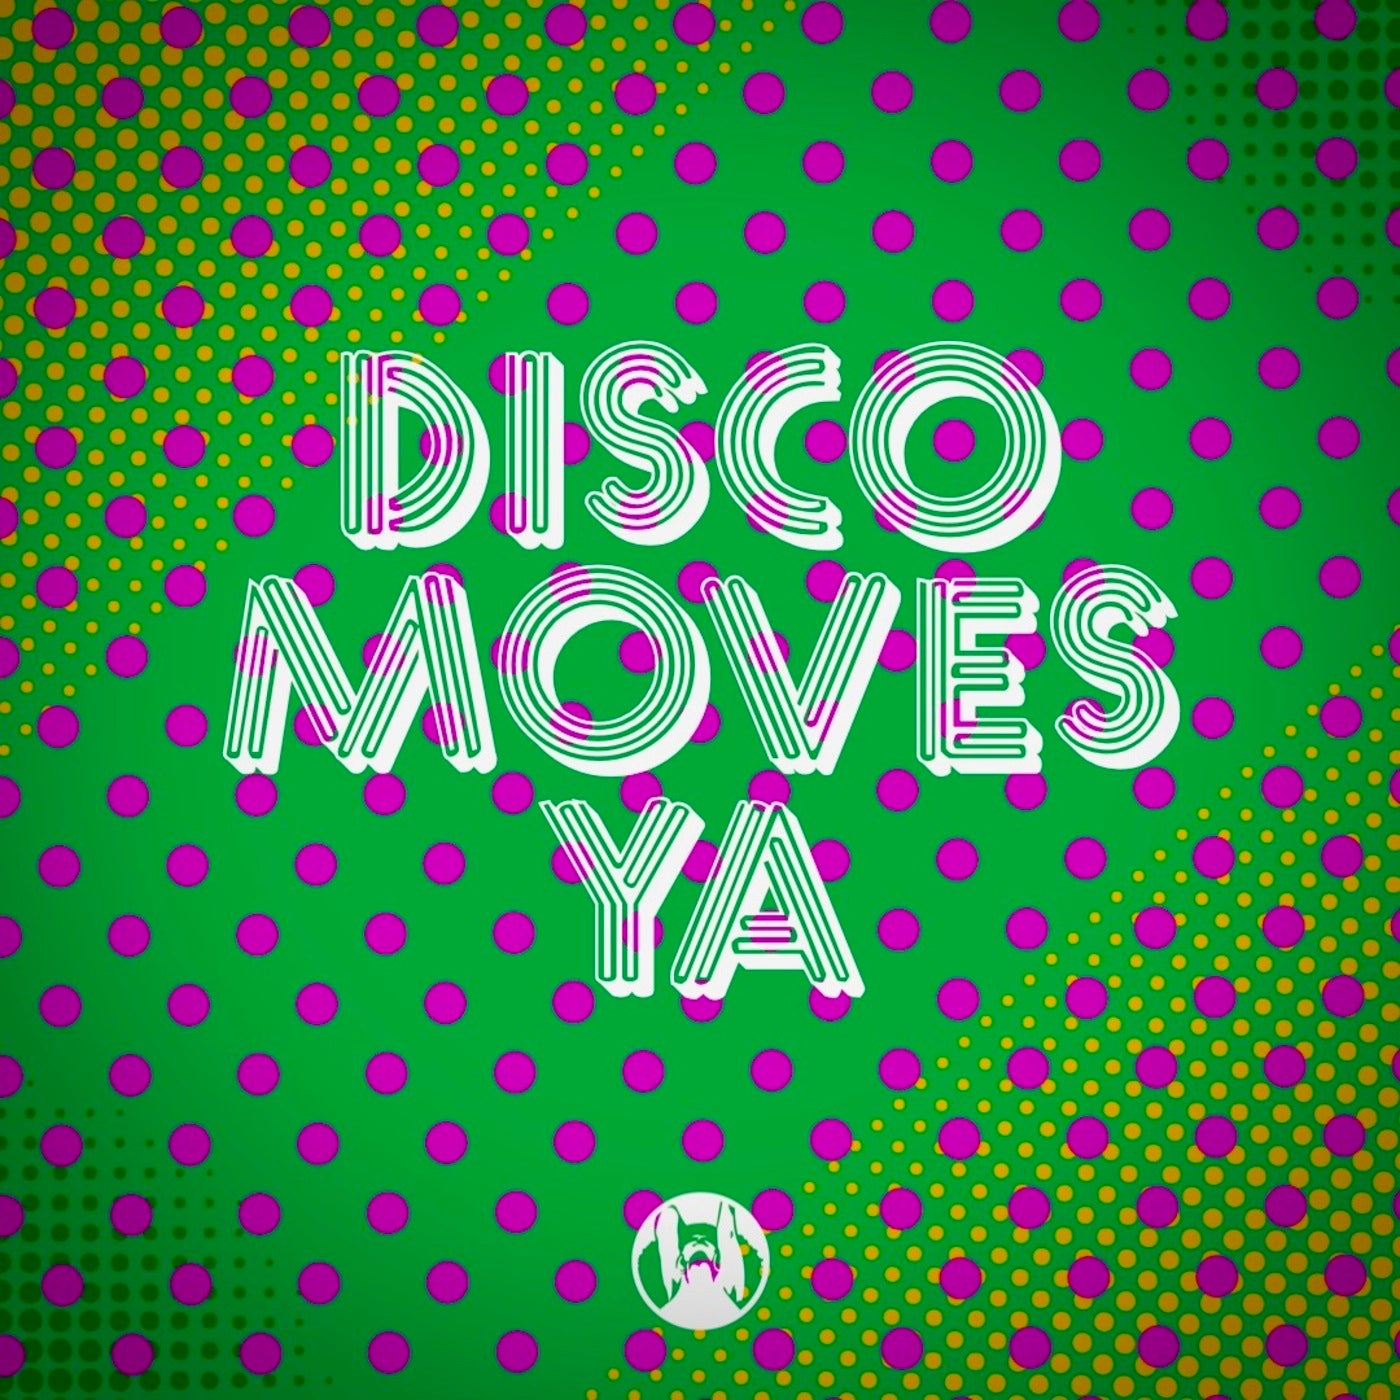 BOND - Disco Moves Ya